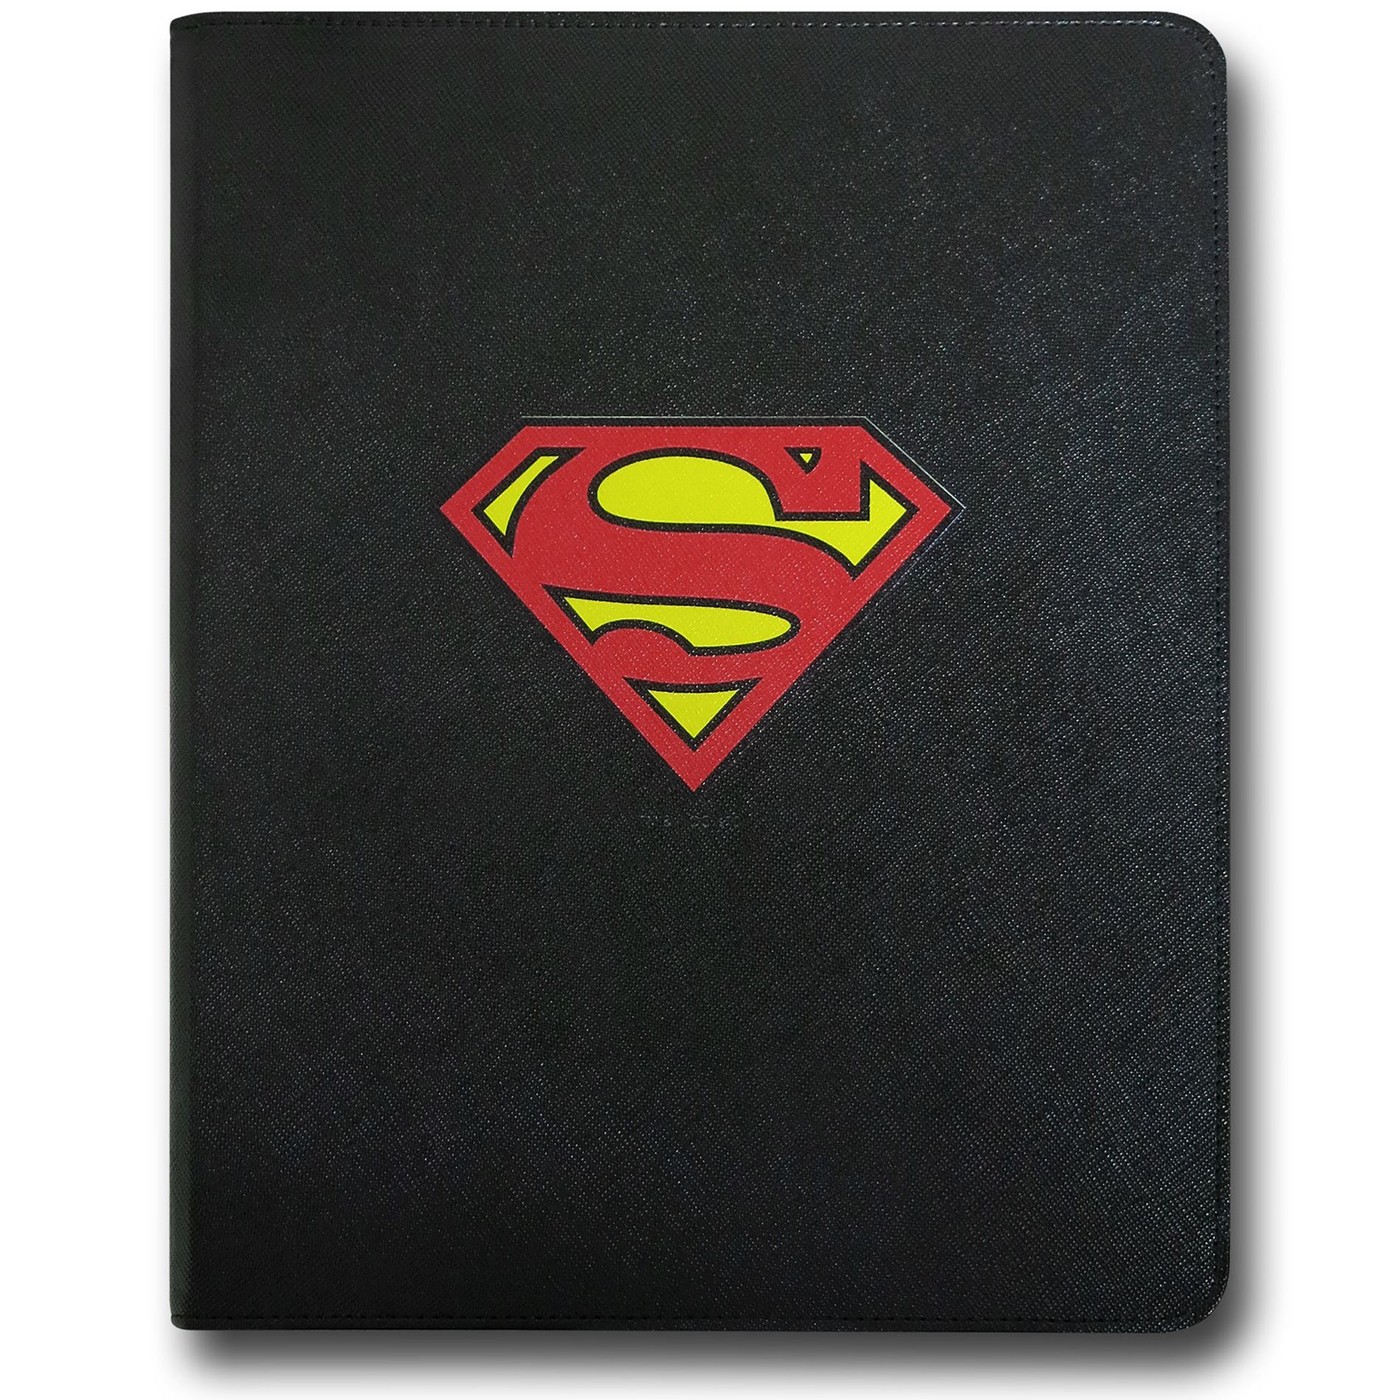 Superman Symbol iPad Stand/Case